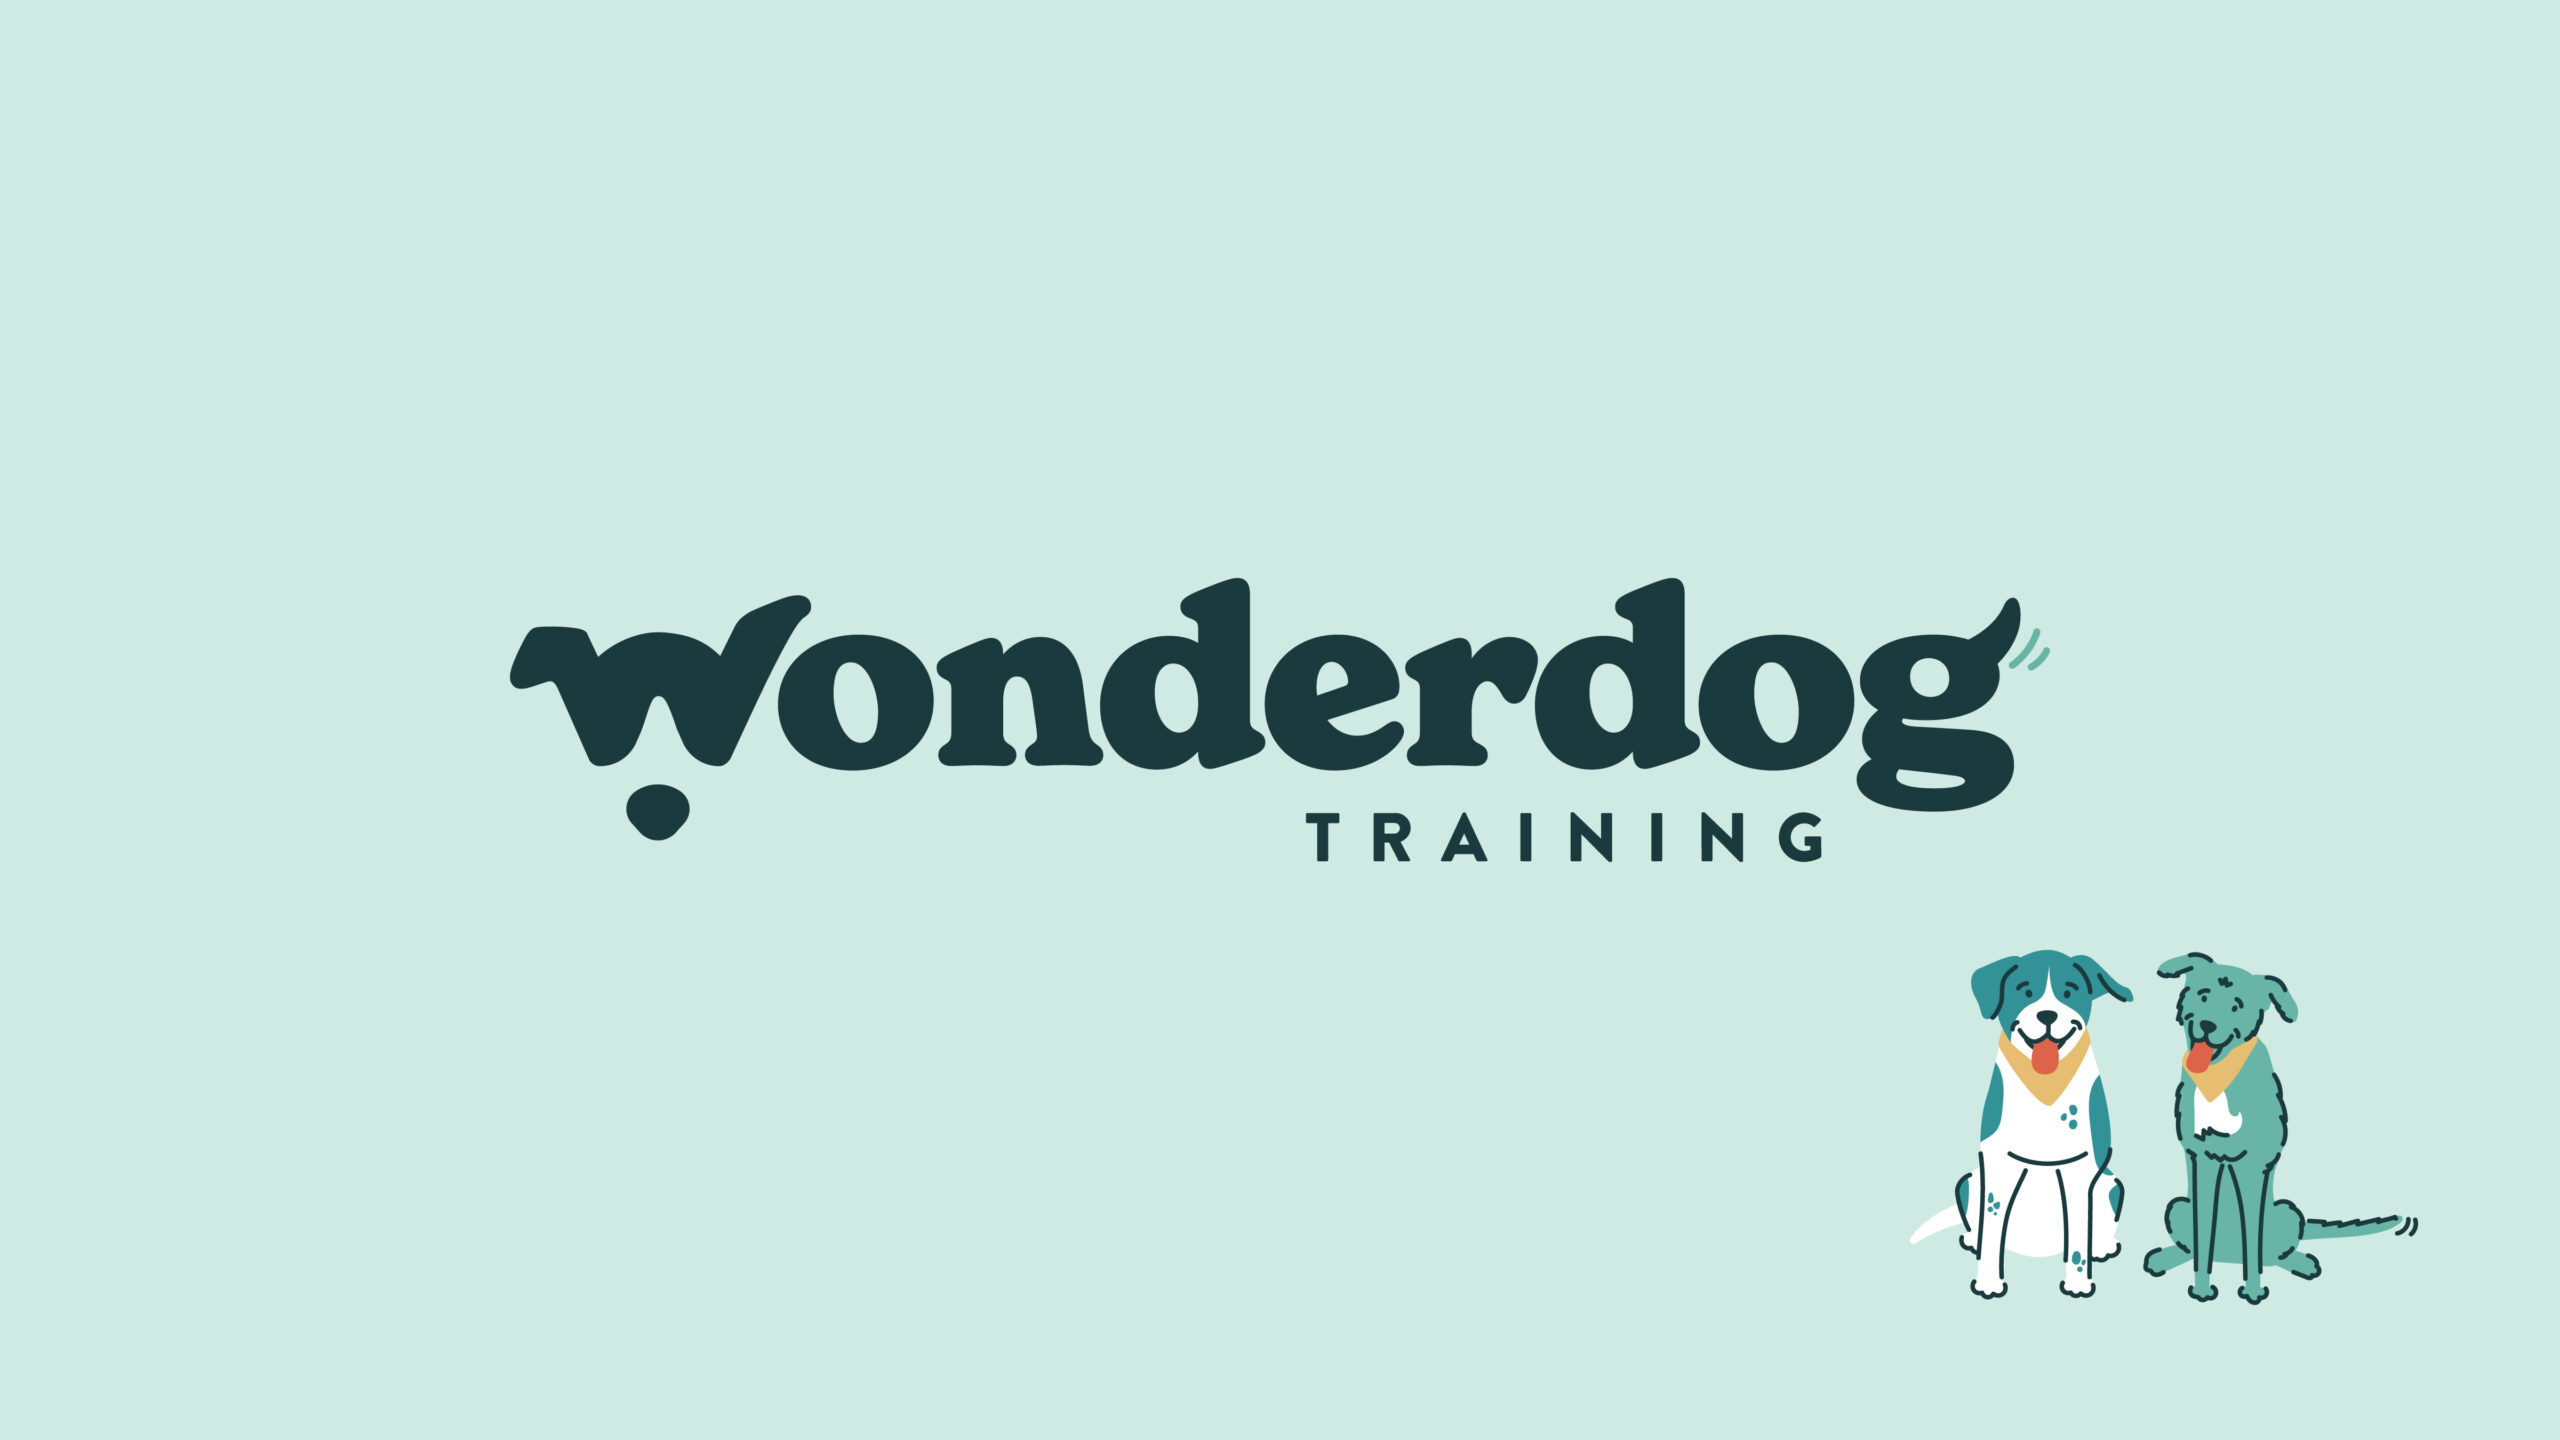 wonderdog logo & dog illustration